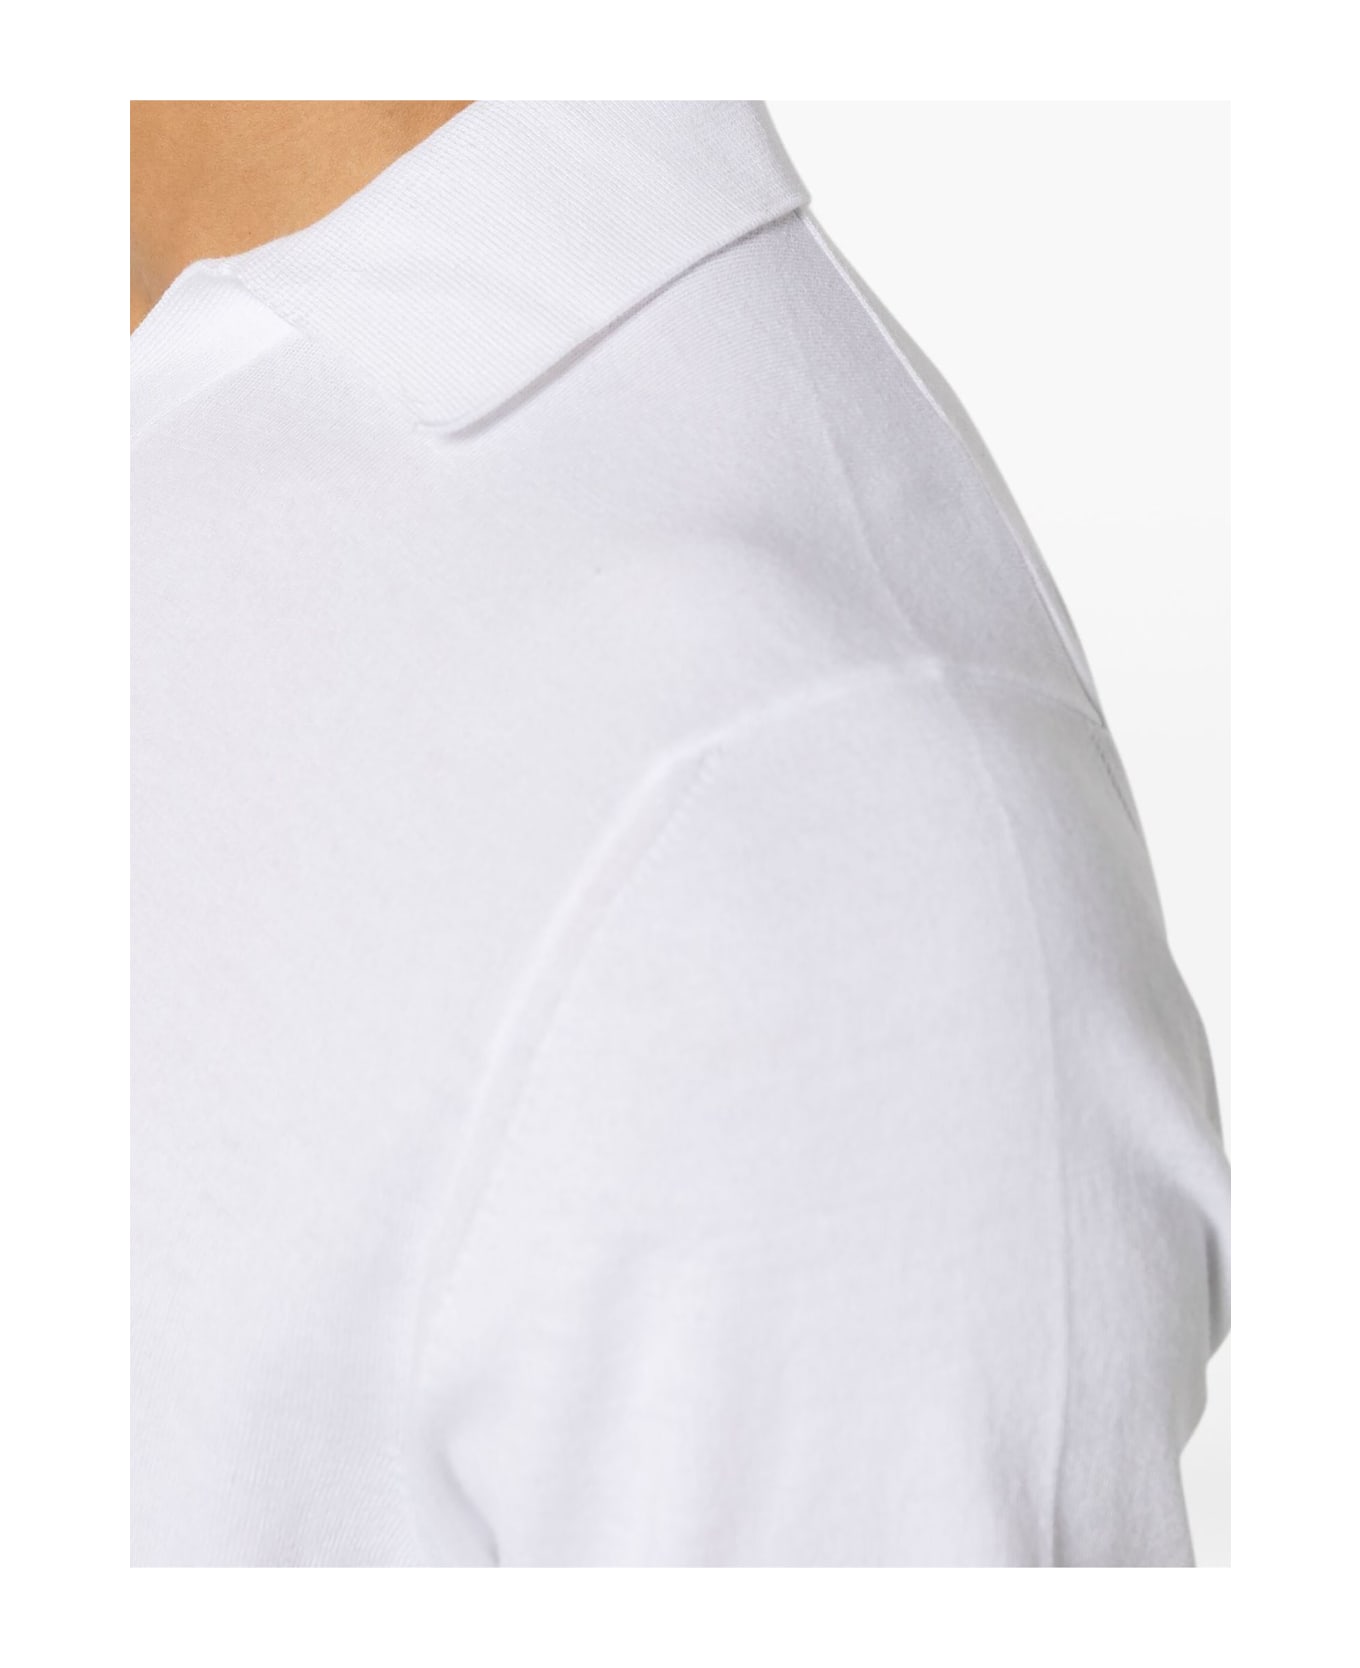 Fedeli Fuji Cotton Polo Shirt - WHITE ポロシャツ